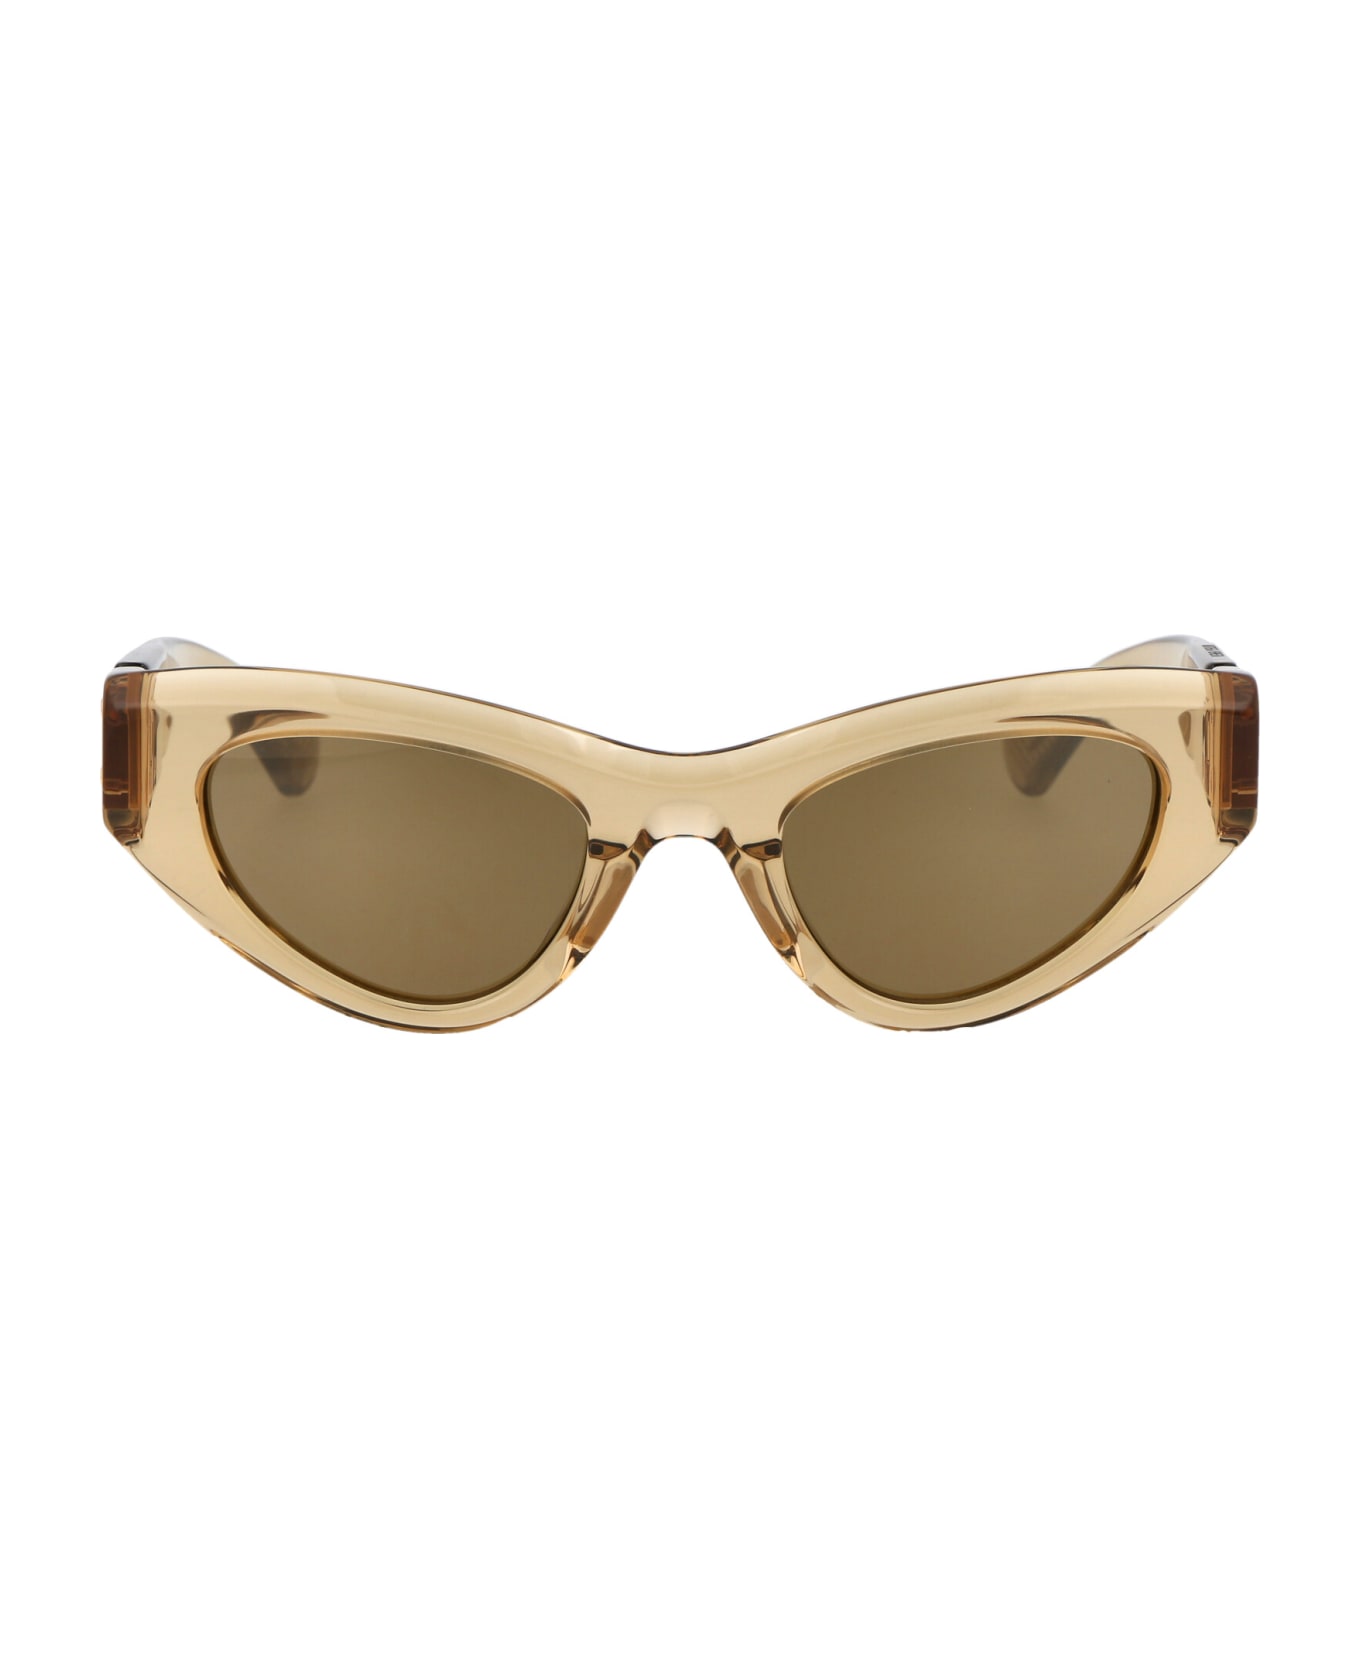 Bottega Veneta Eyewear Bv1142s Sunglasses - 003 BROWN BROWN BRONZE サングラス